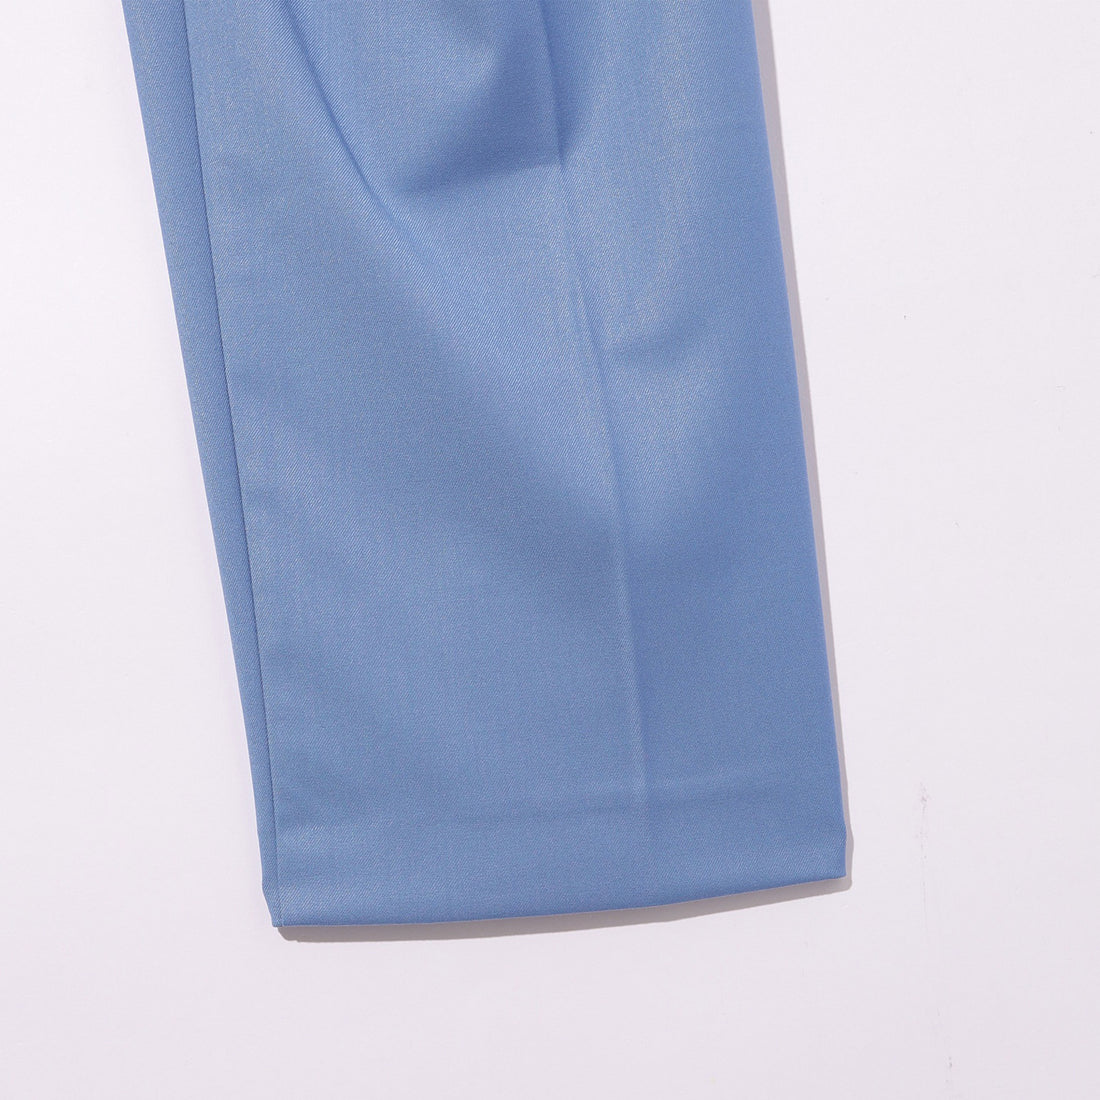 Le pantalon de costume bleu ciel